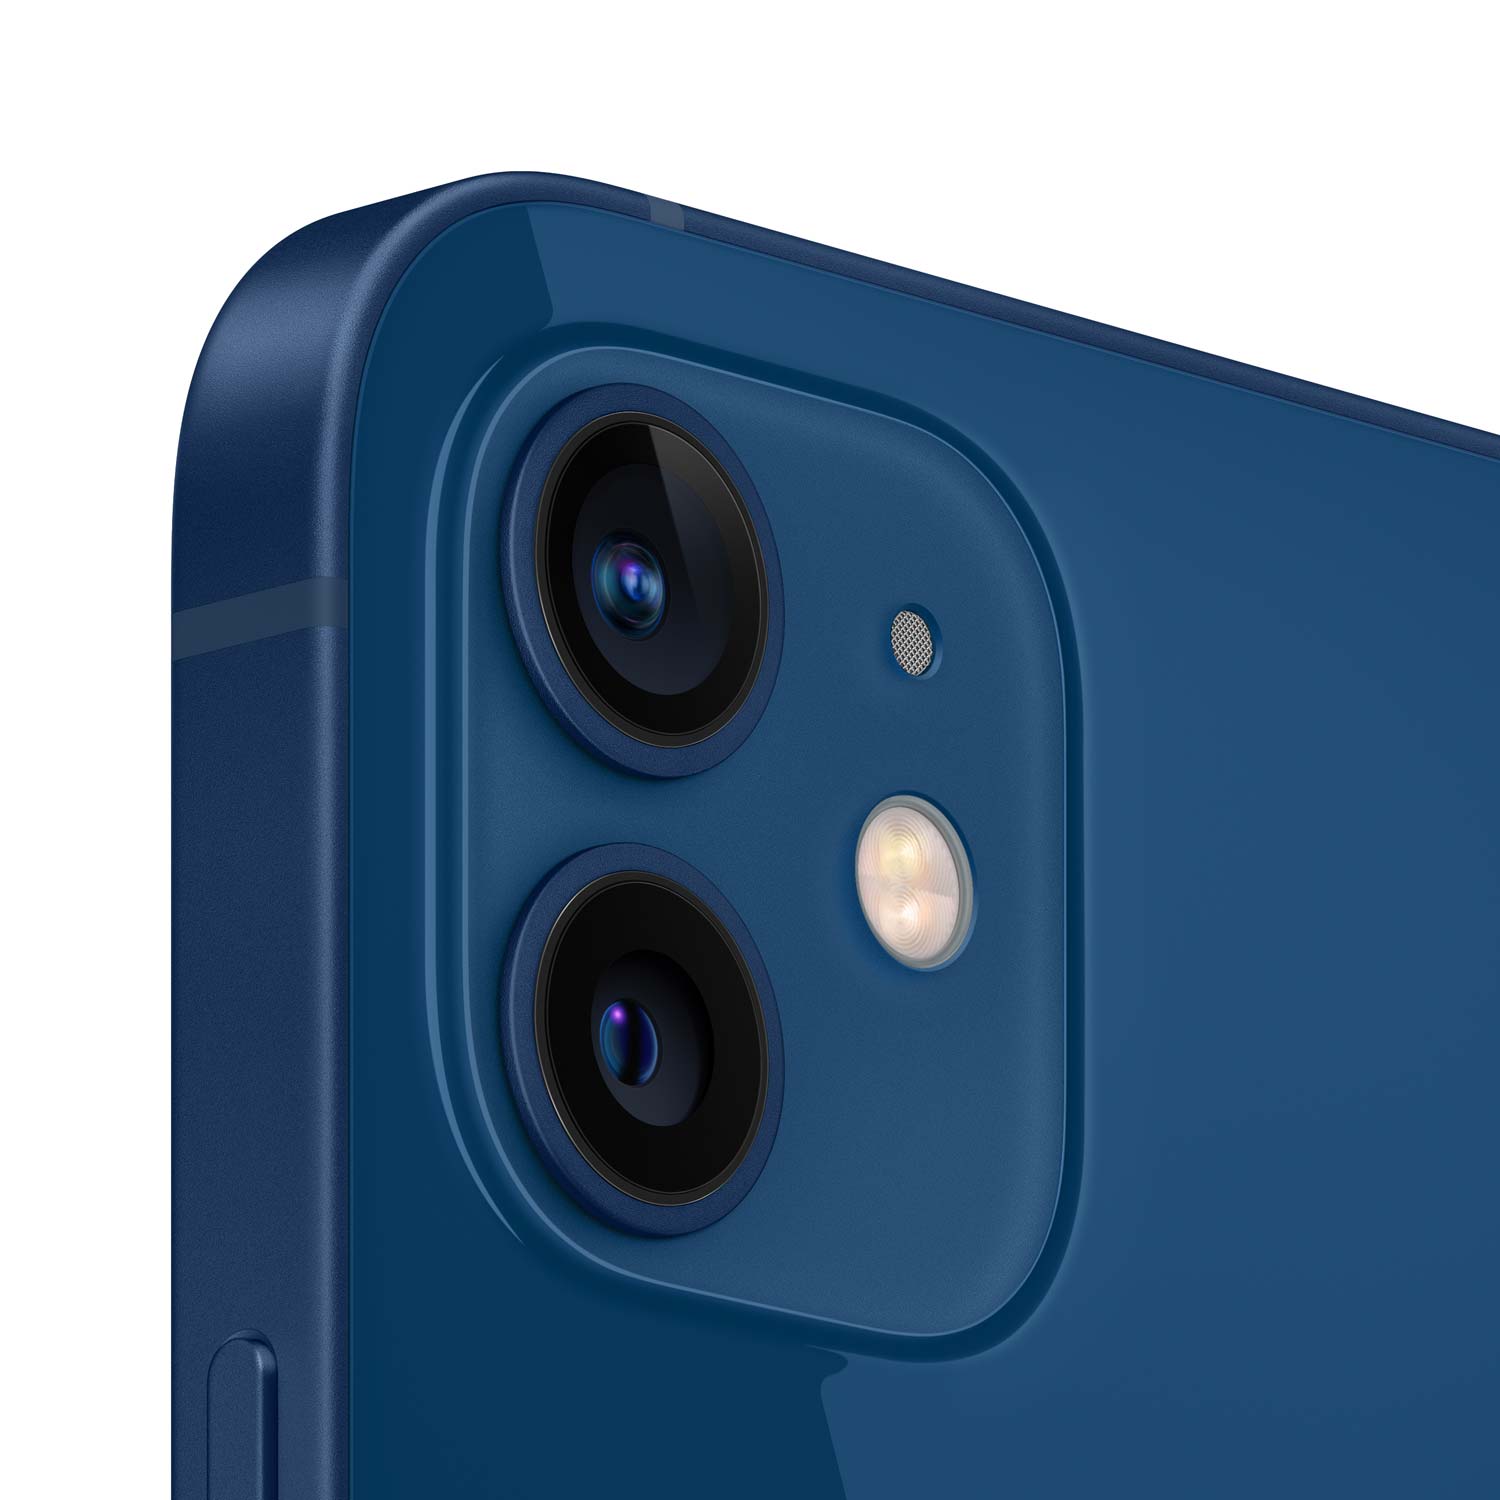 Apple iPhone 12 64GB - Blau // NEU